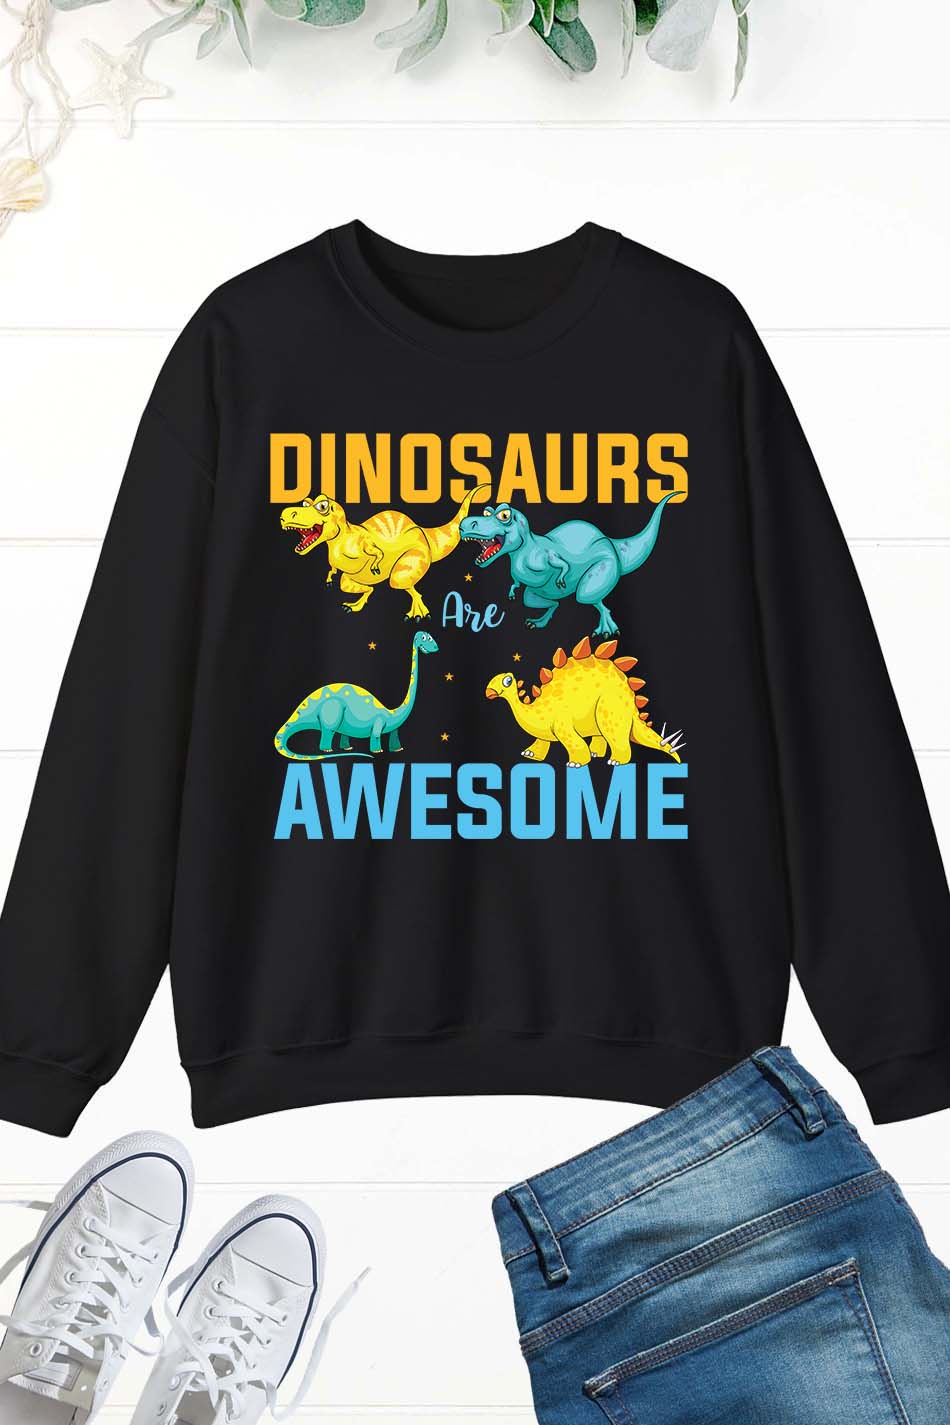 Dinosaur Sweatshirt